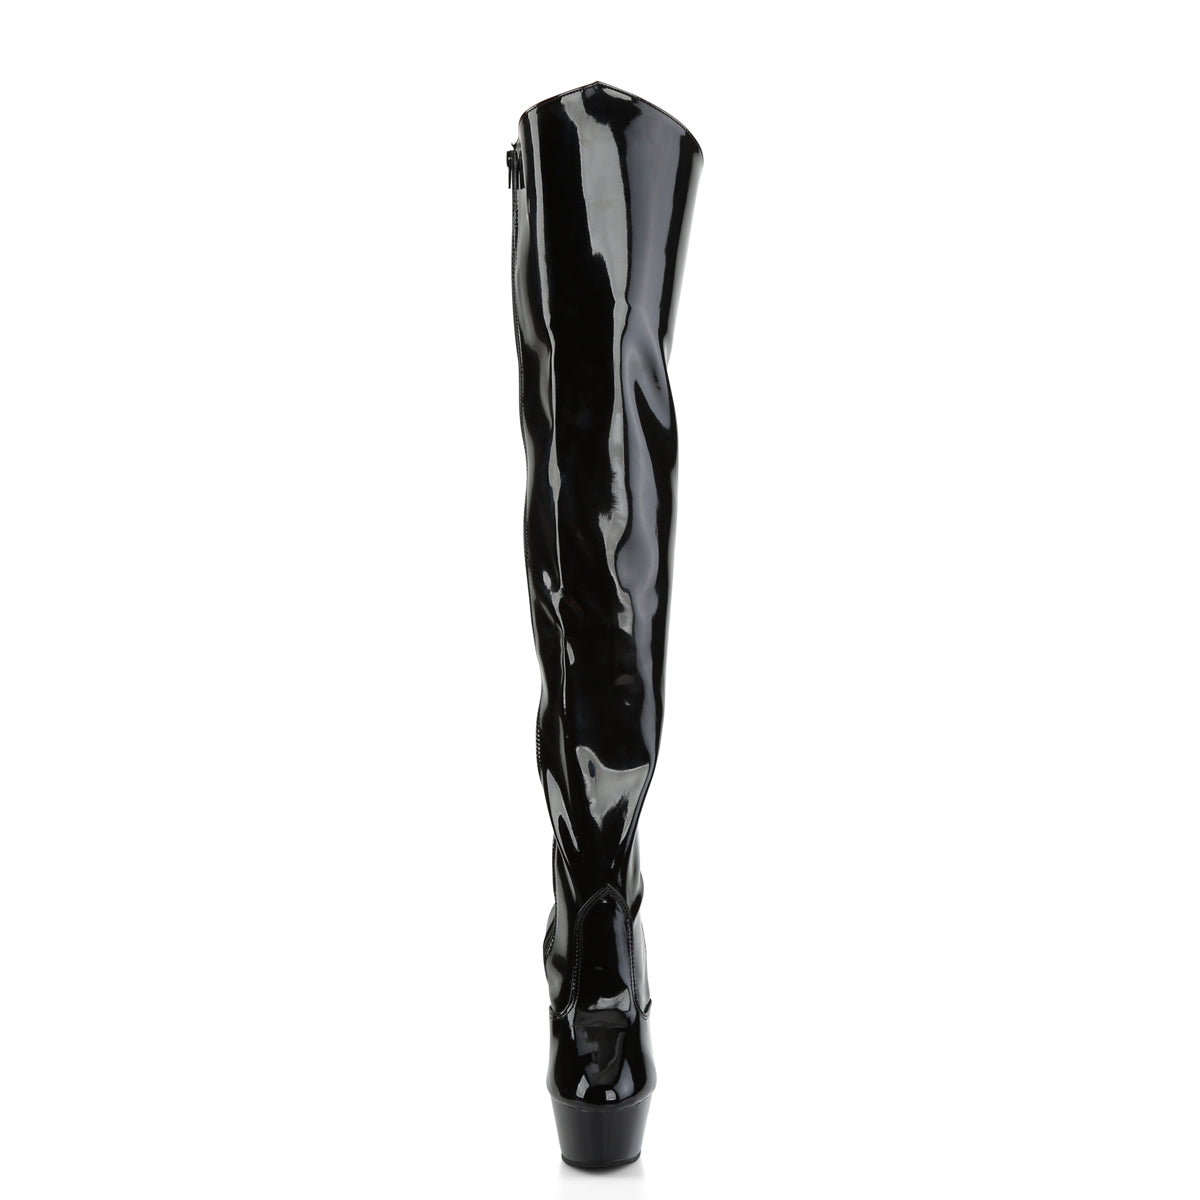 KISS-3010 Pleaser 6" Heel Black Patent Pole Dancing Platform-Pleaser- Sexy Shoes Alternative Footwear